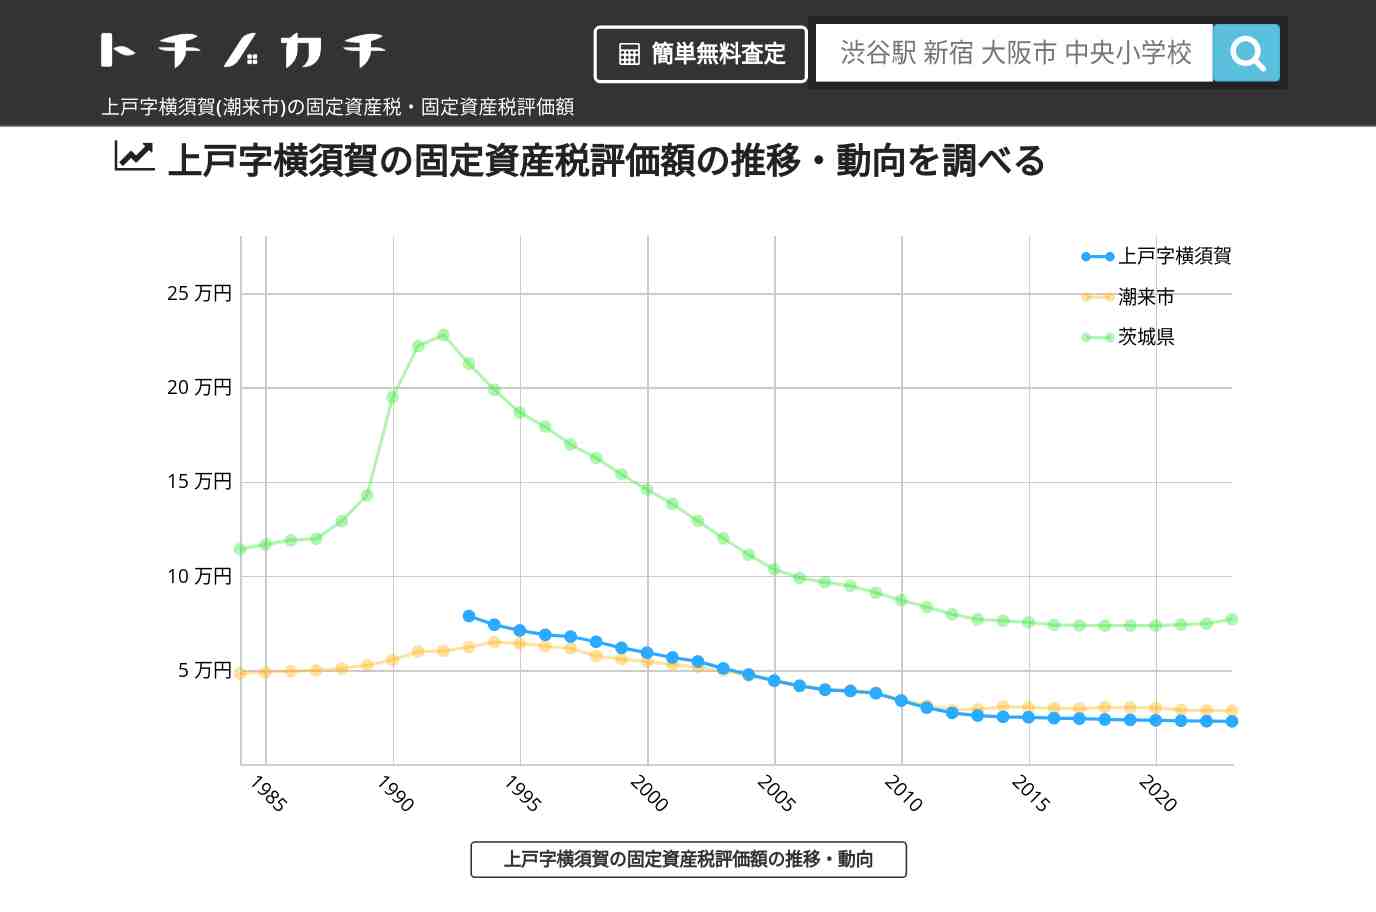 上戸字横須賀(潮来市)の固定資産税・固定資産税評価額 | トチノカチ